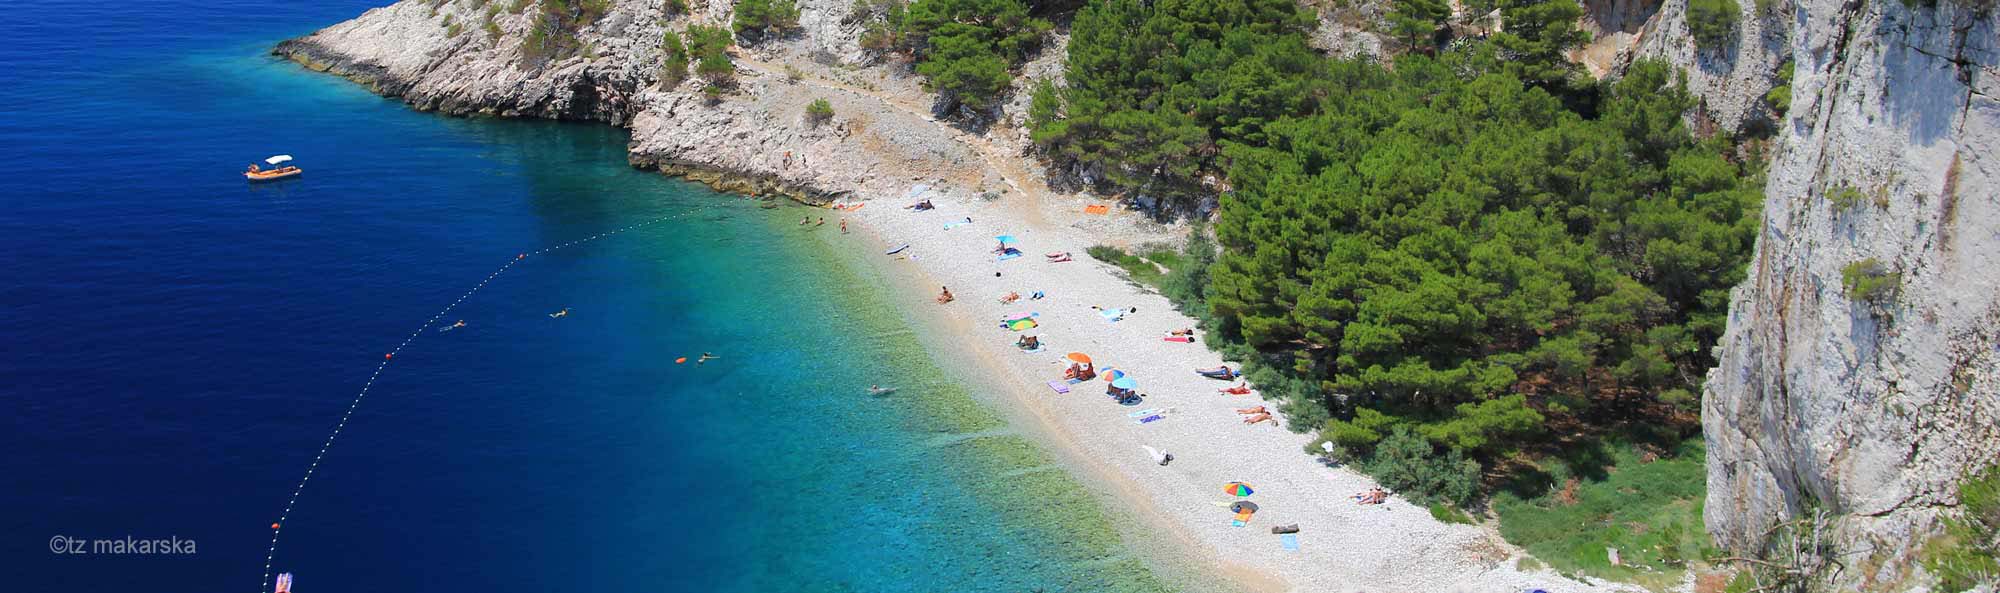 View of the famous Nugal Beach, Makarska, Croatia - thumb